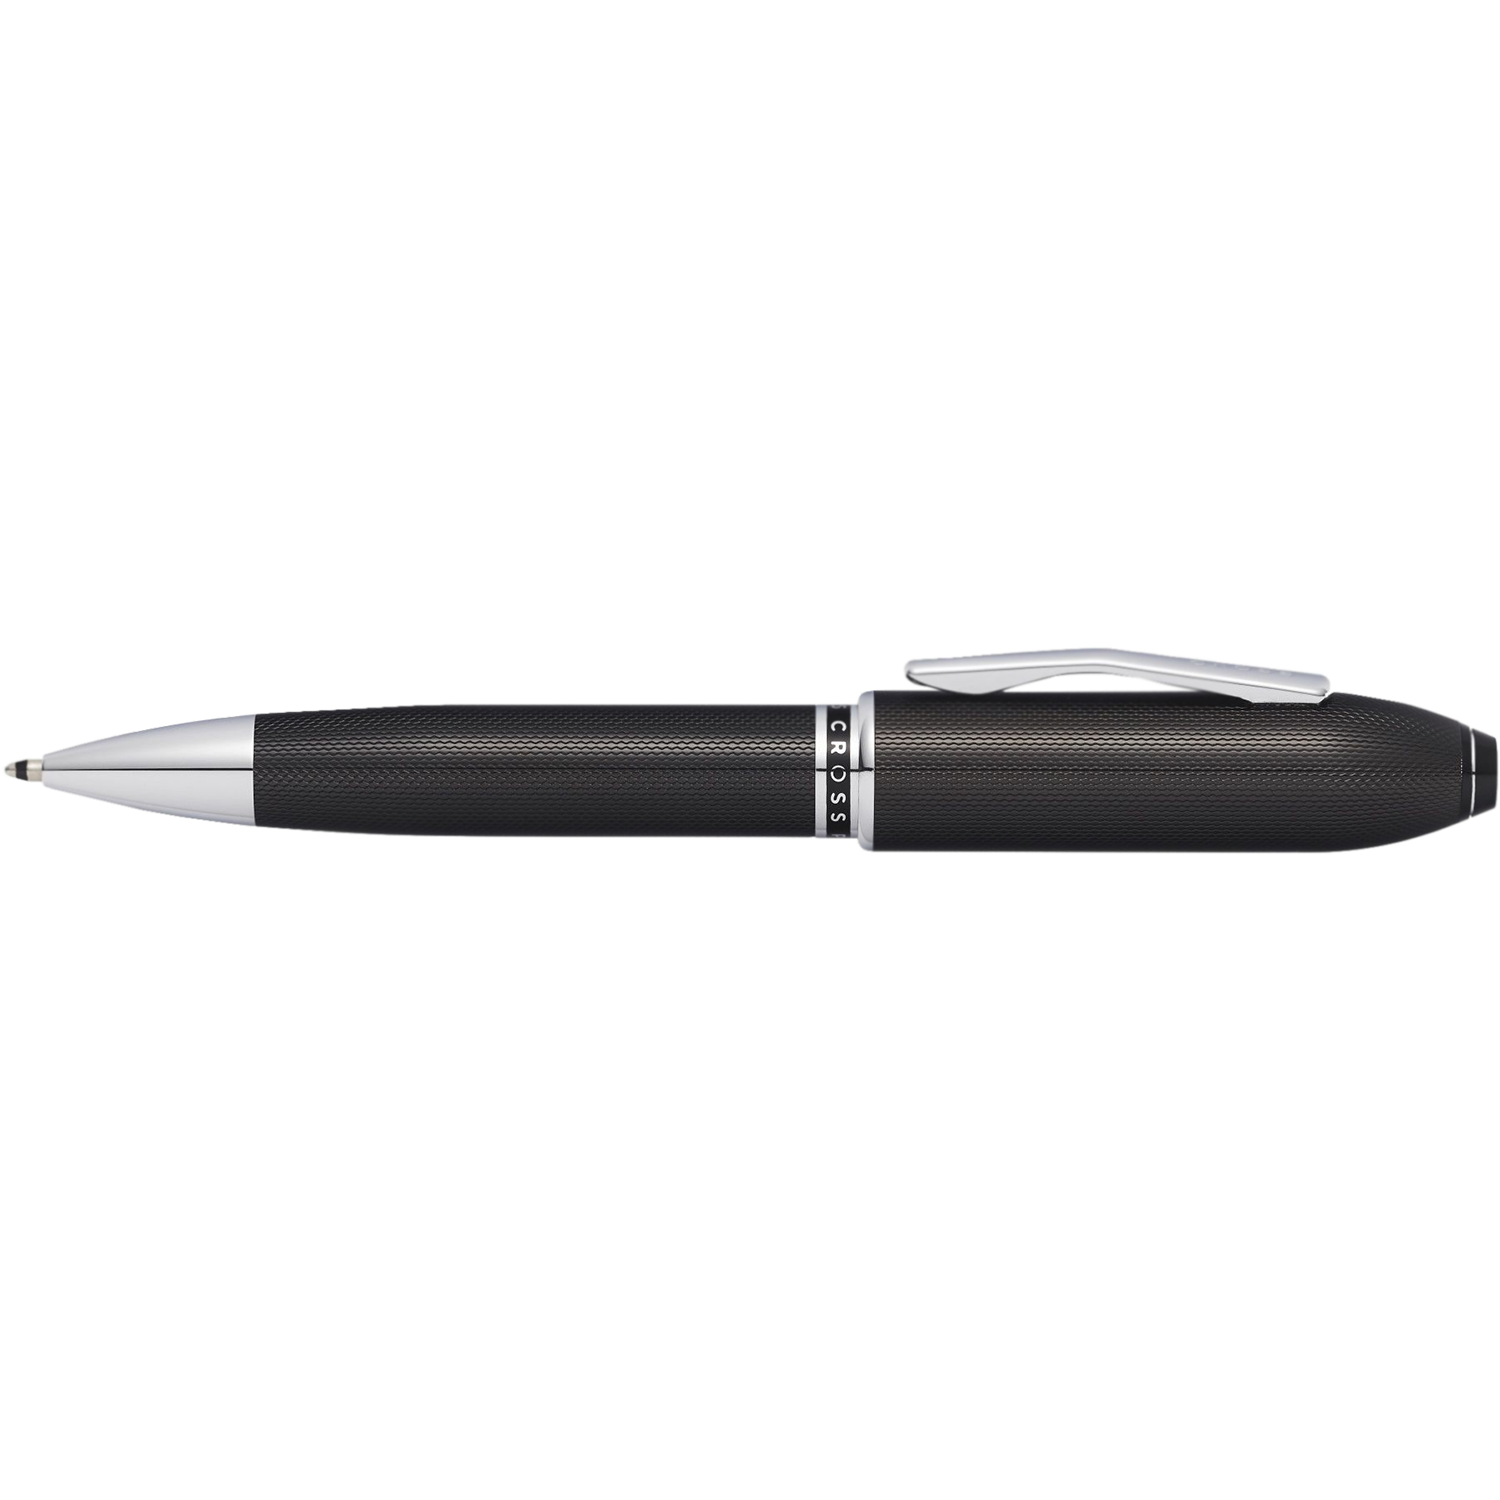 Cross Peerless TrackR Ballpoint Pen - Carbon Black-Pen Boutique Ltd